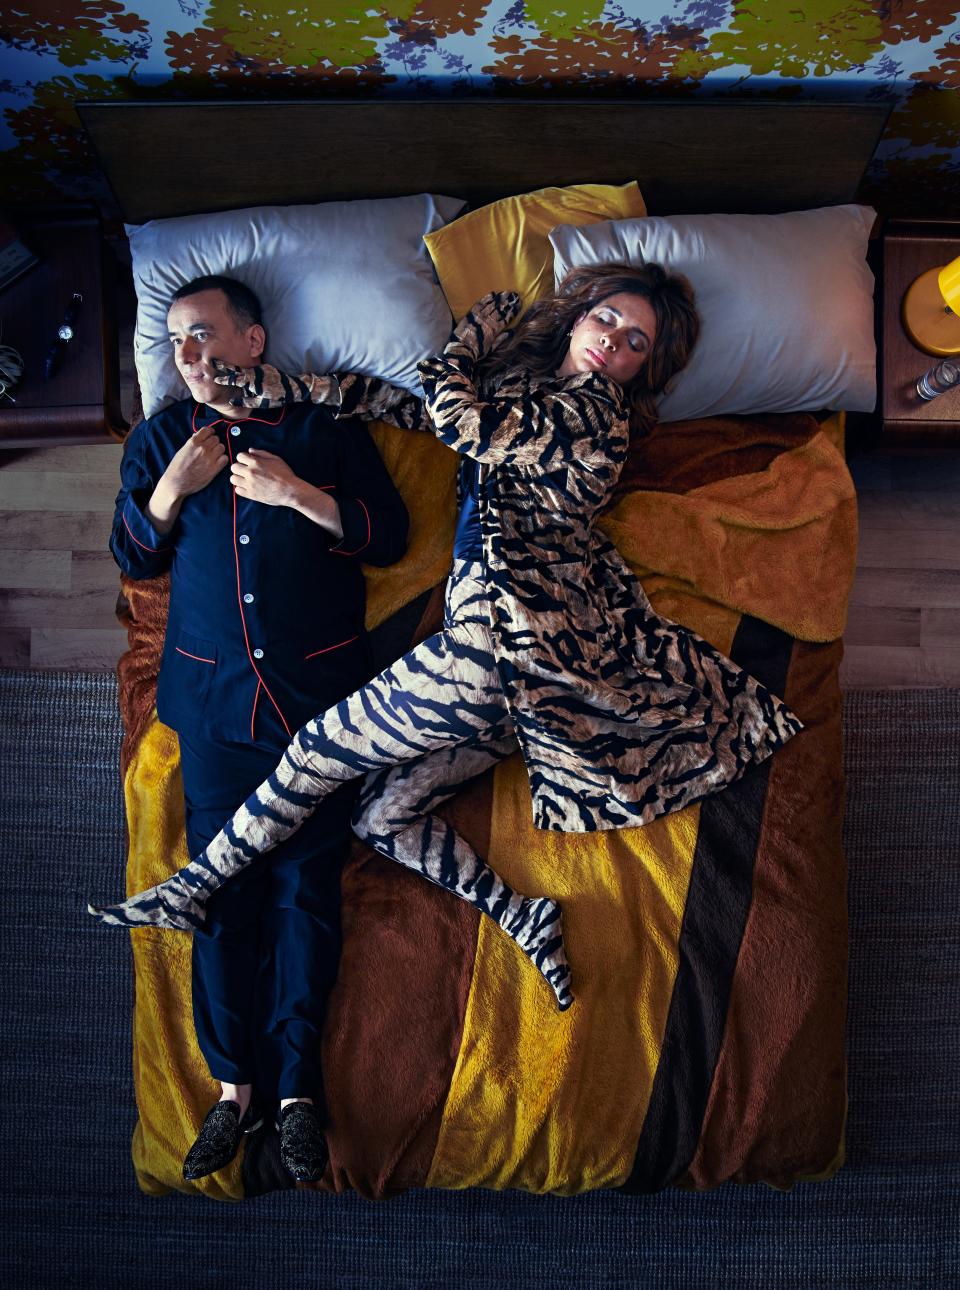 Pajamas, $600, by Olatz / Loafers, $1,295, by Christian Louboutin / On her: Coat, leggings, gloves by Dolce & Gabbana / Bodysuit by Fleur du Mal